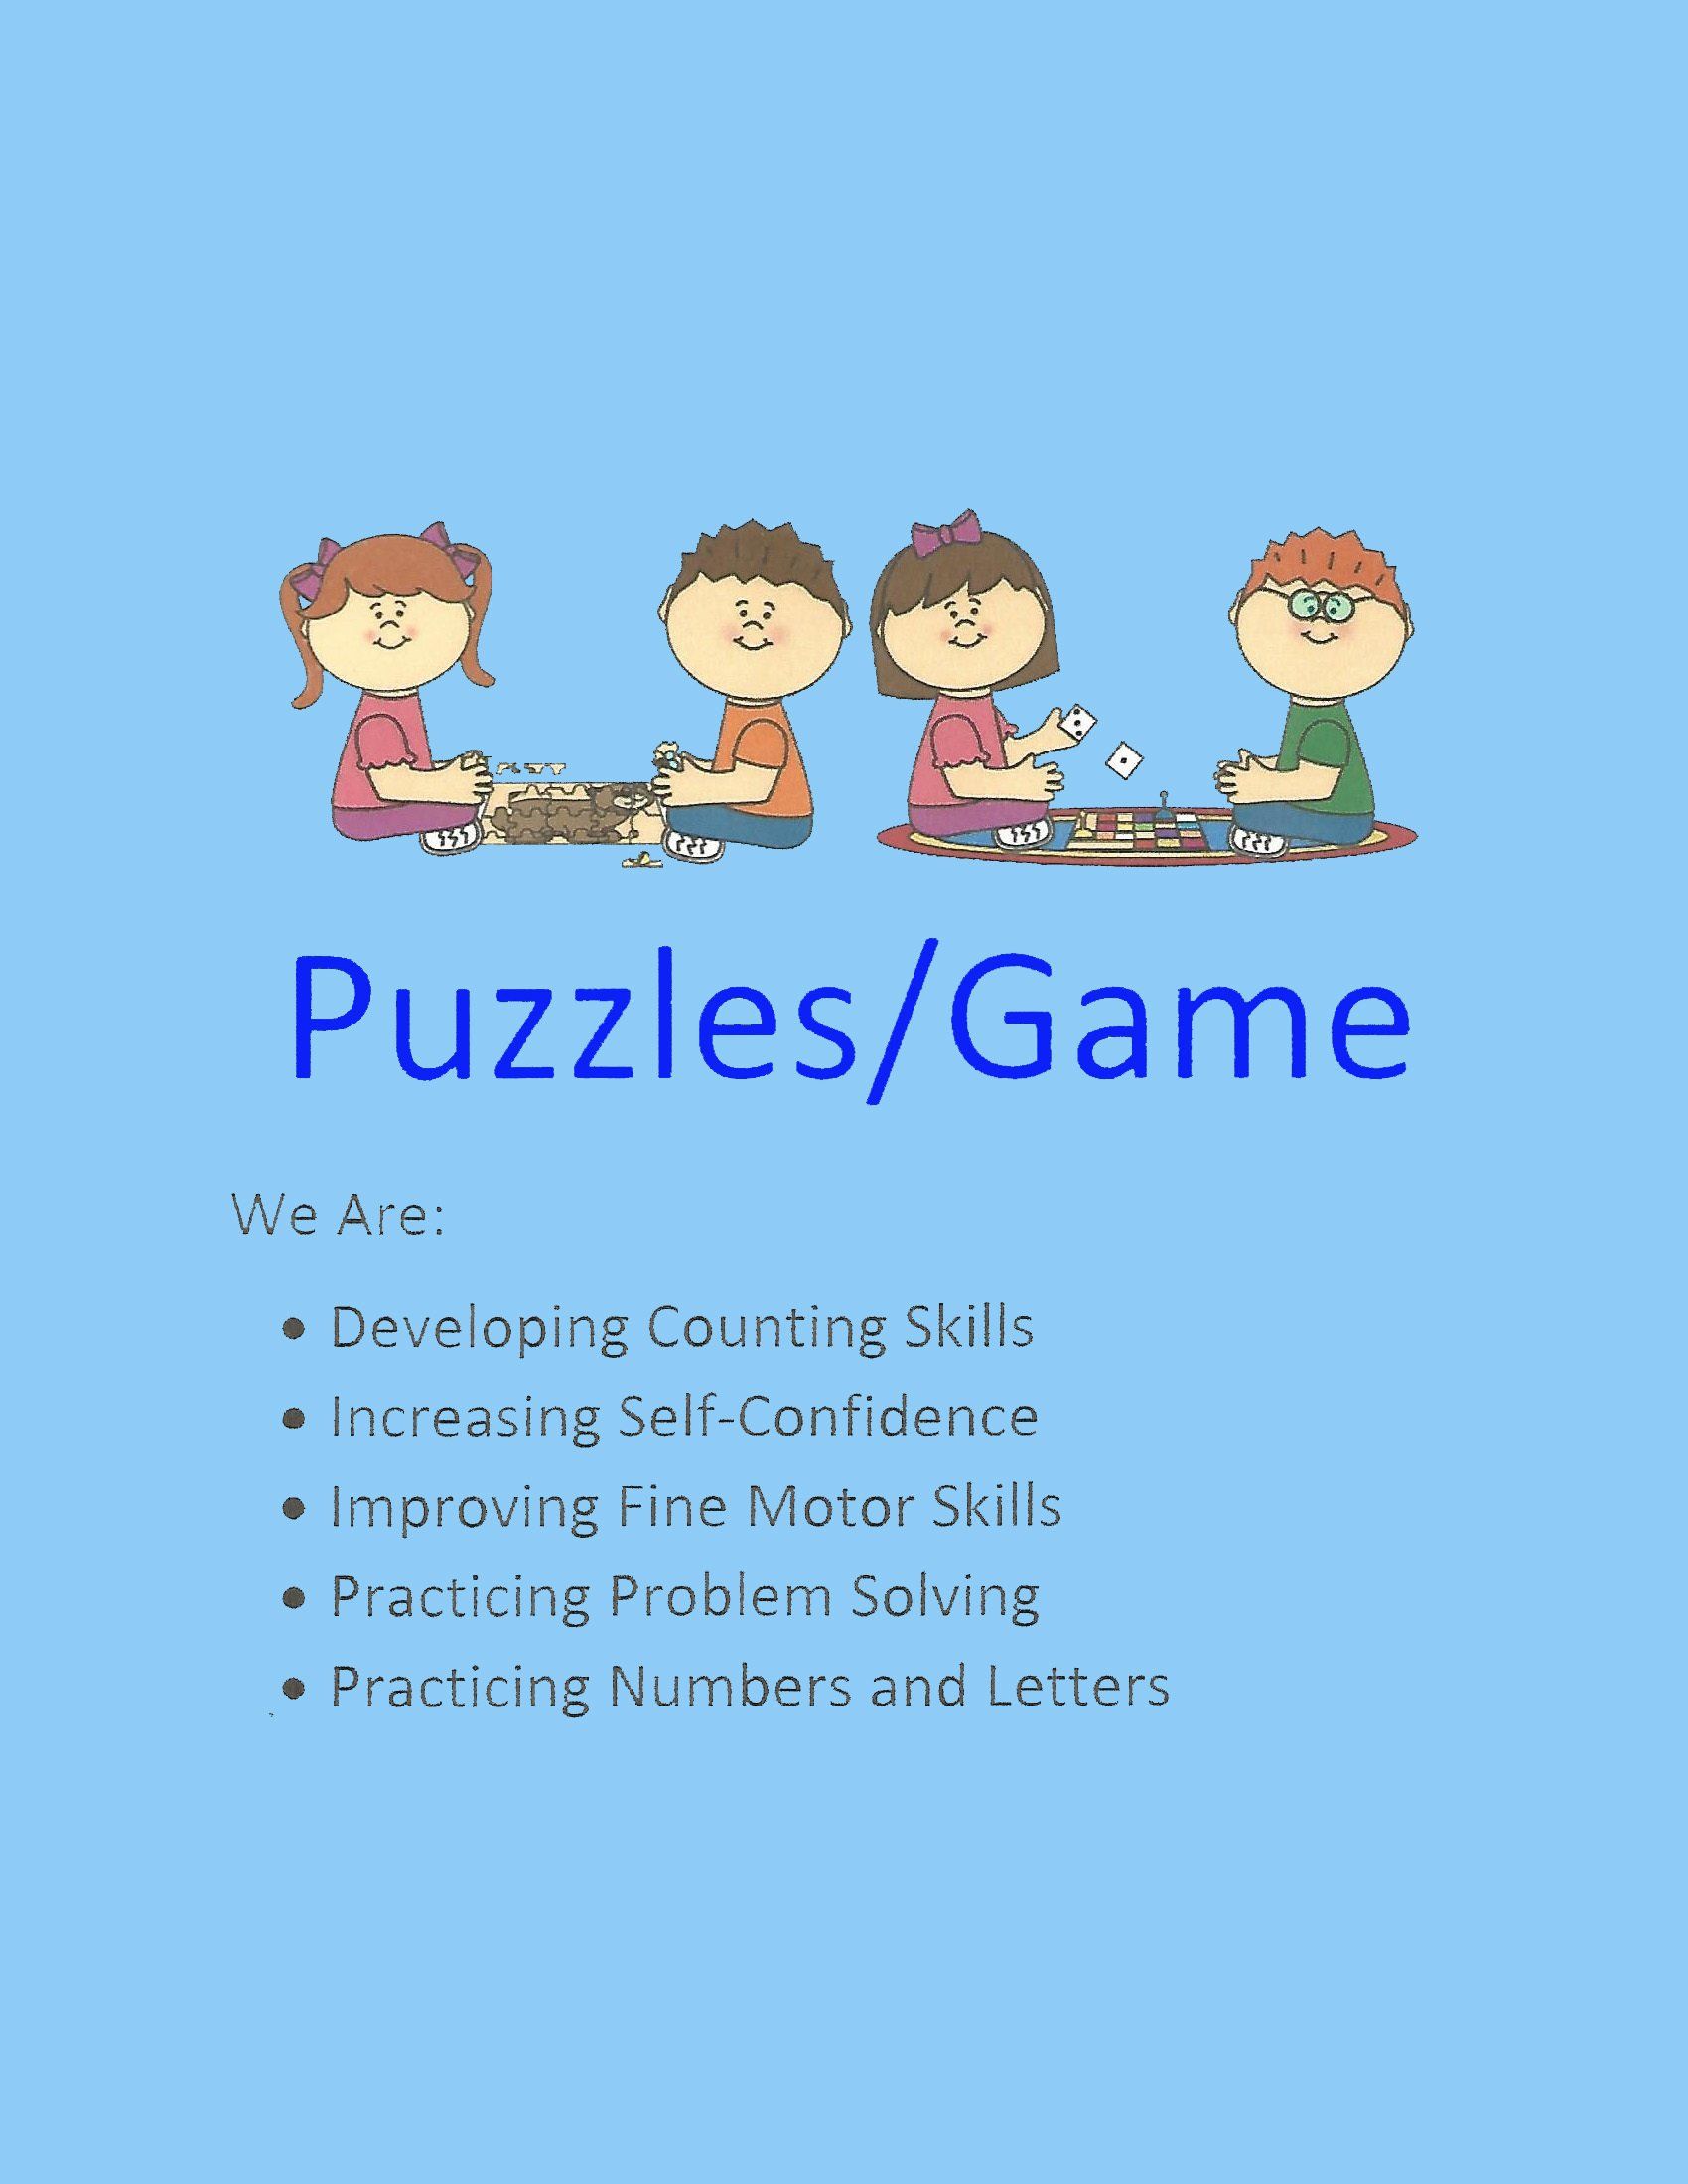 Puzzles and Games - Preschool Curriculum